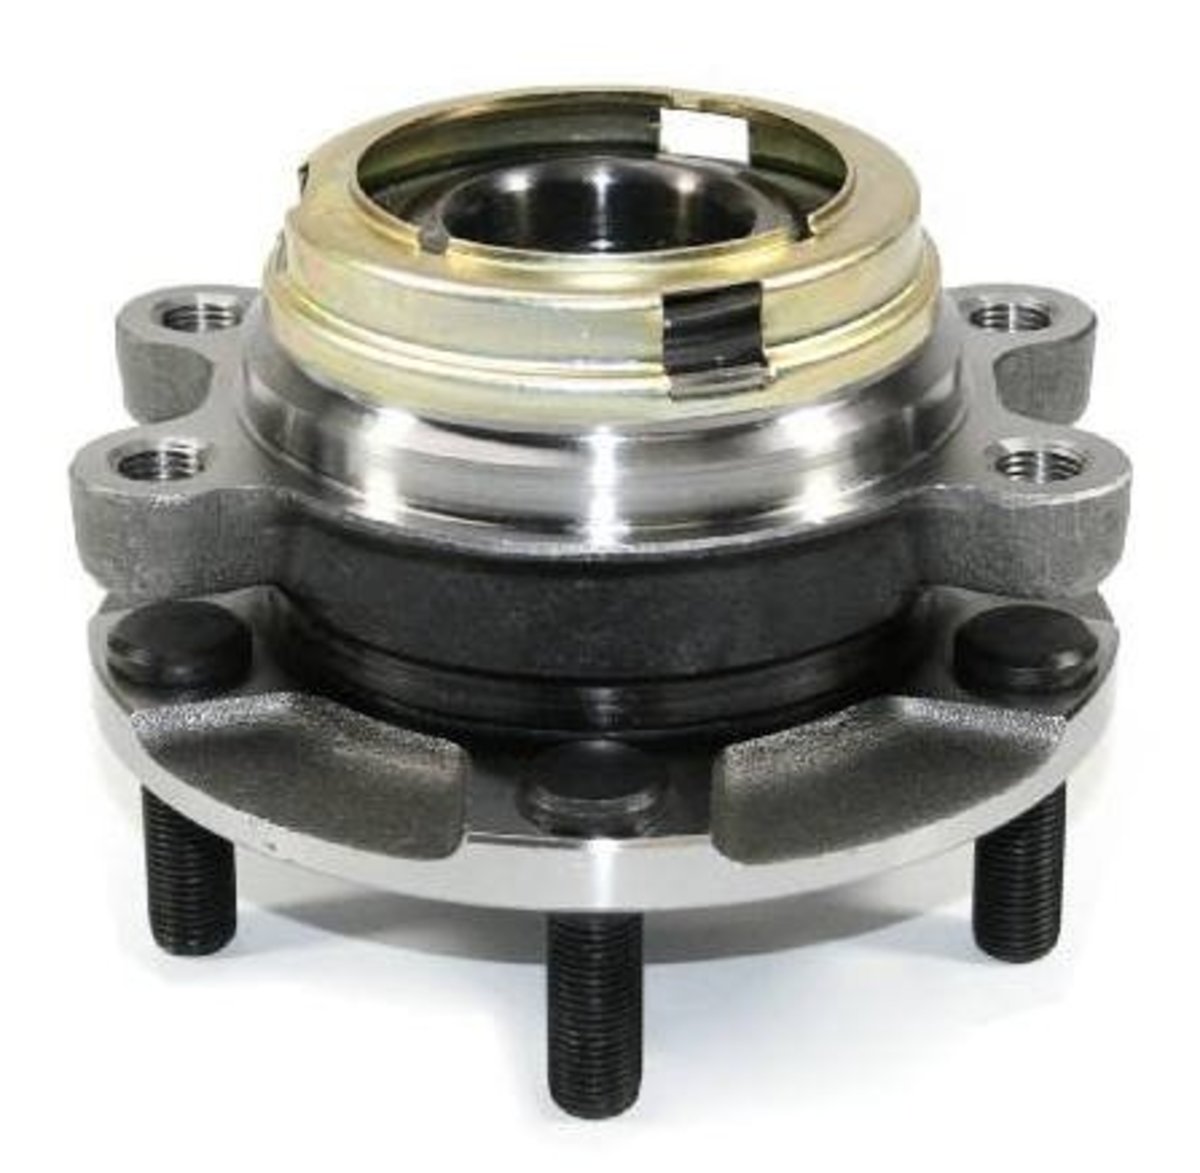 Nissan murano wheel bearing problems #6